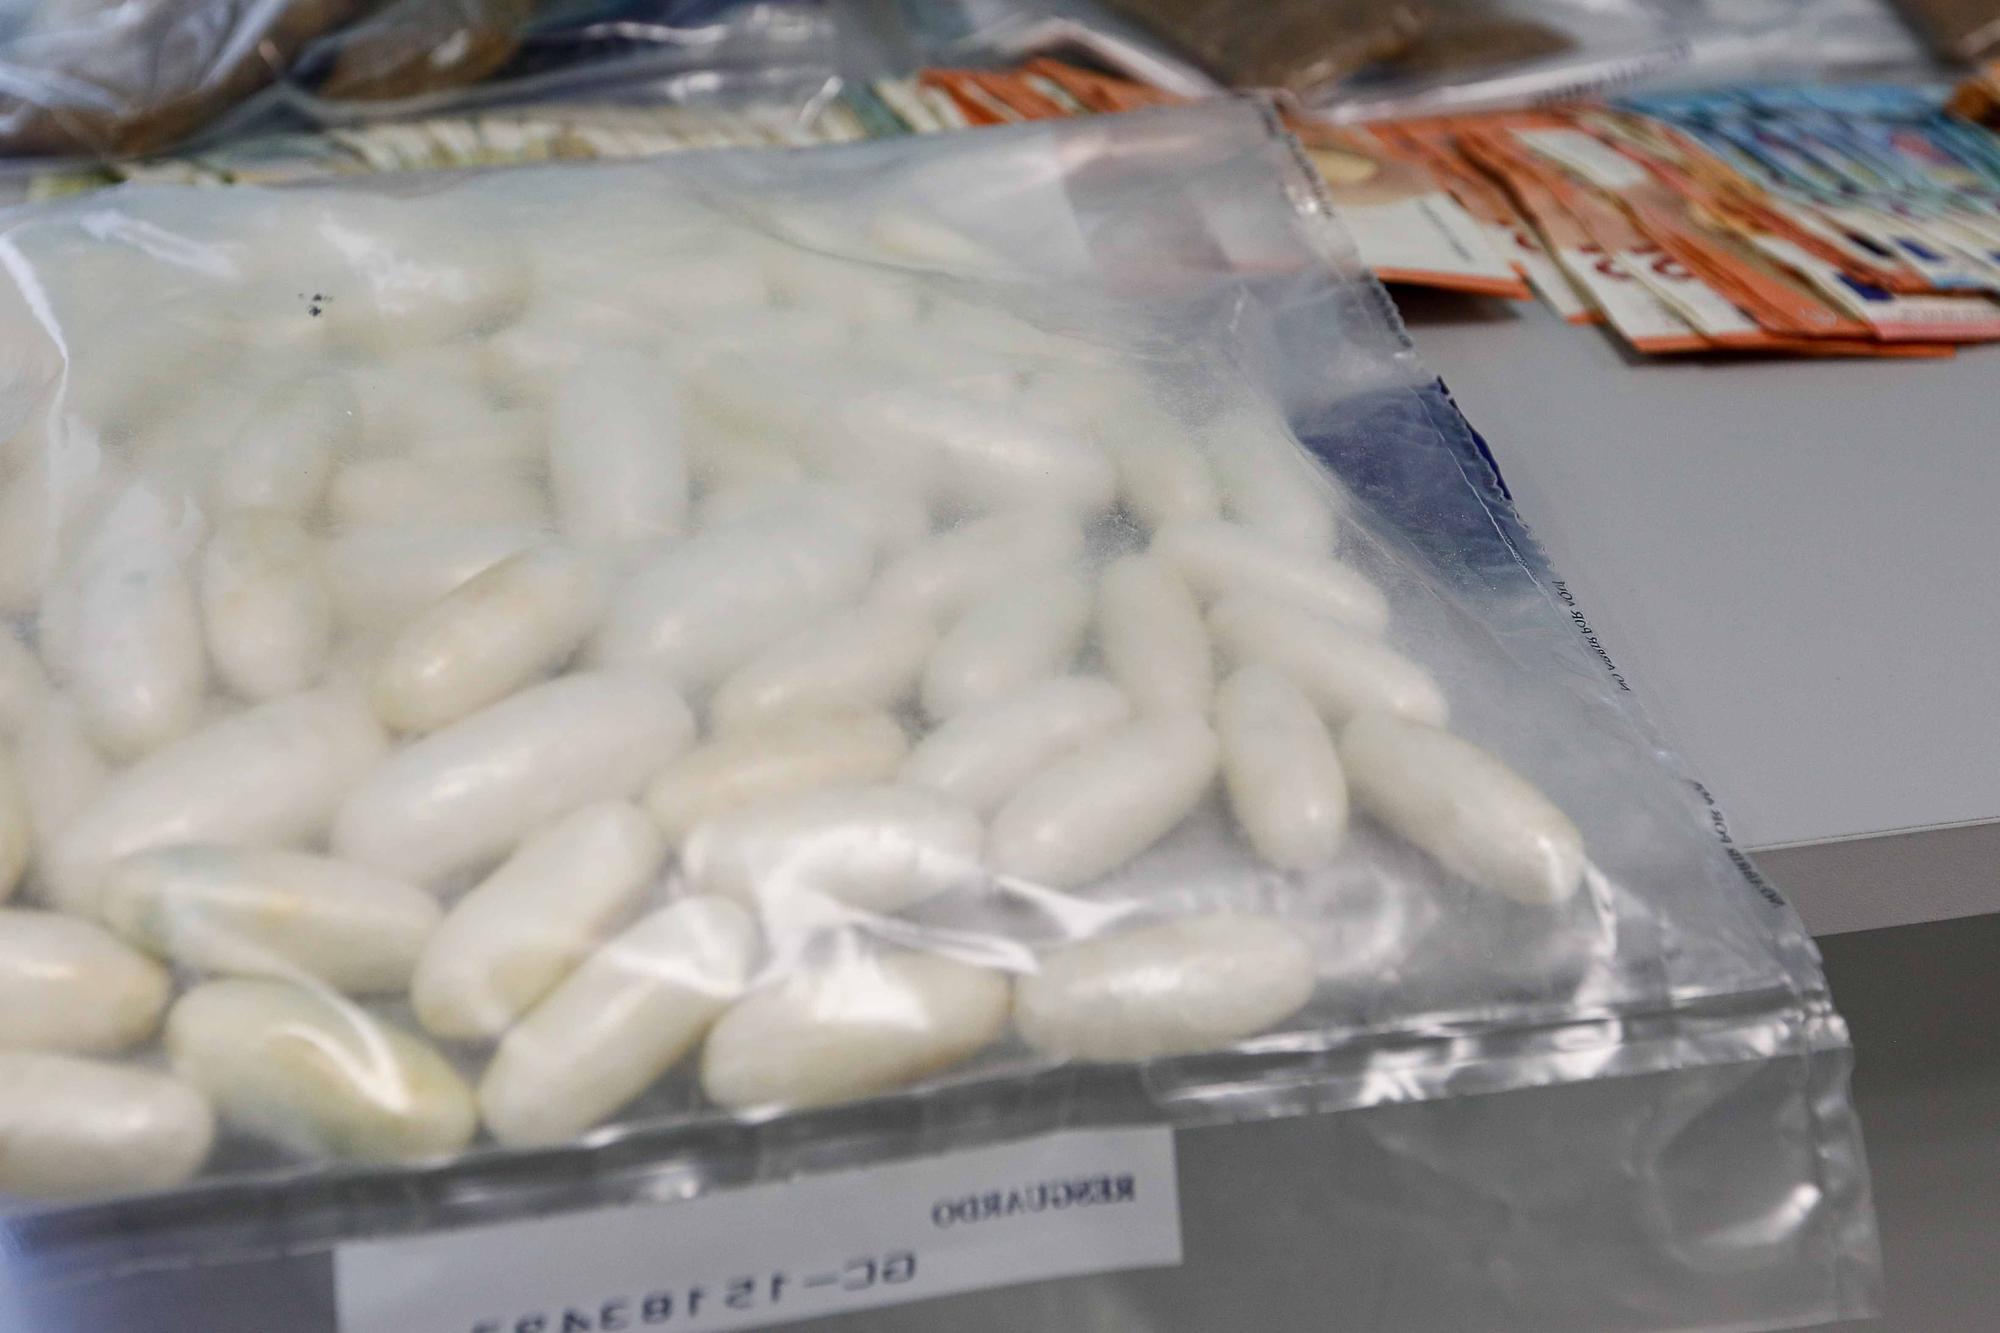 La Guardia Civil intercepta 16 kilos de cocaína en Ibiza en dos incautaciones